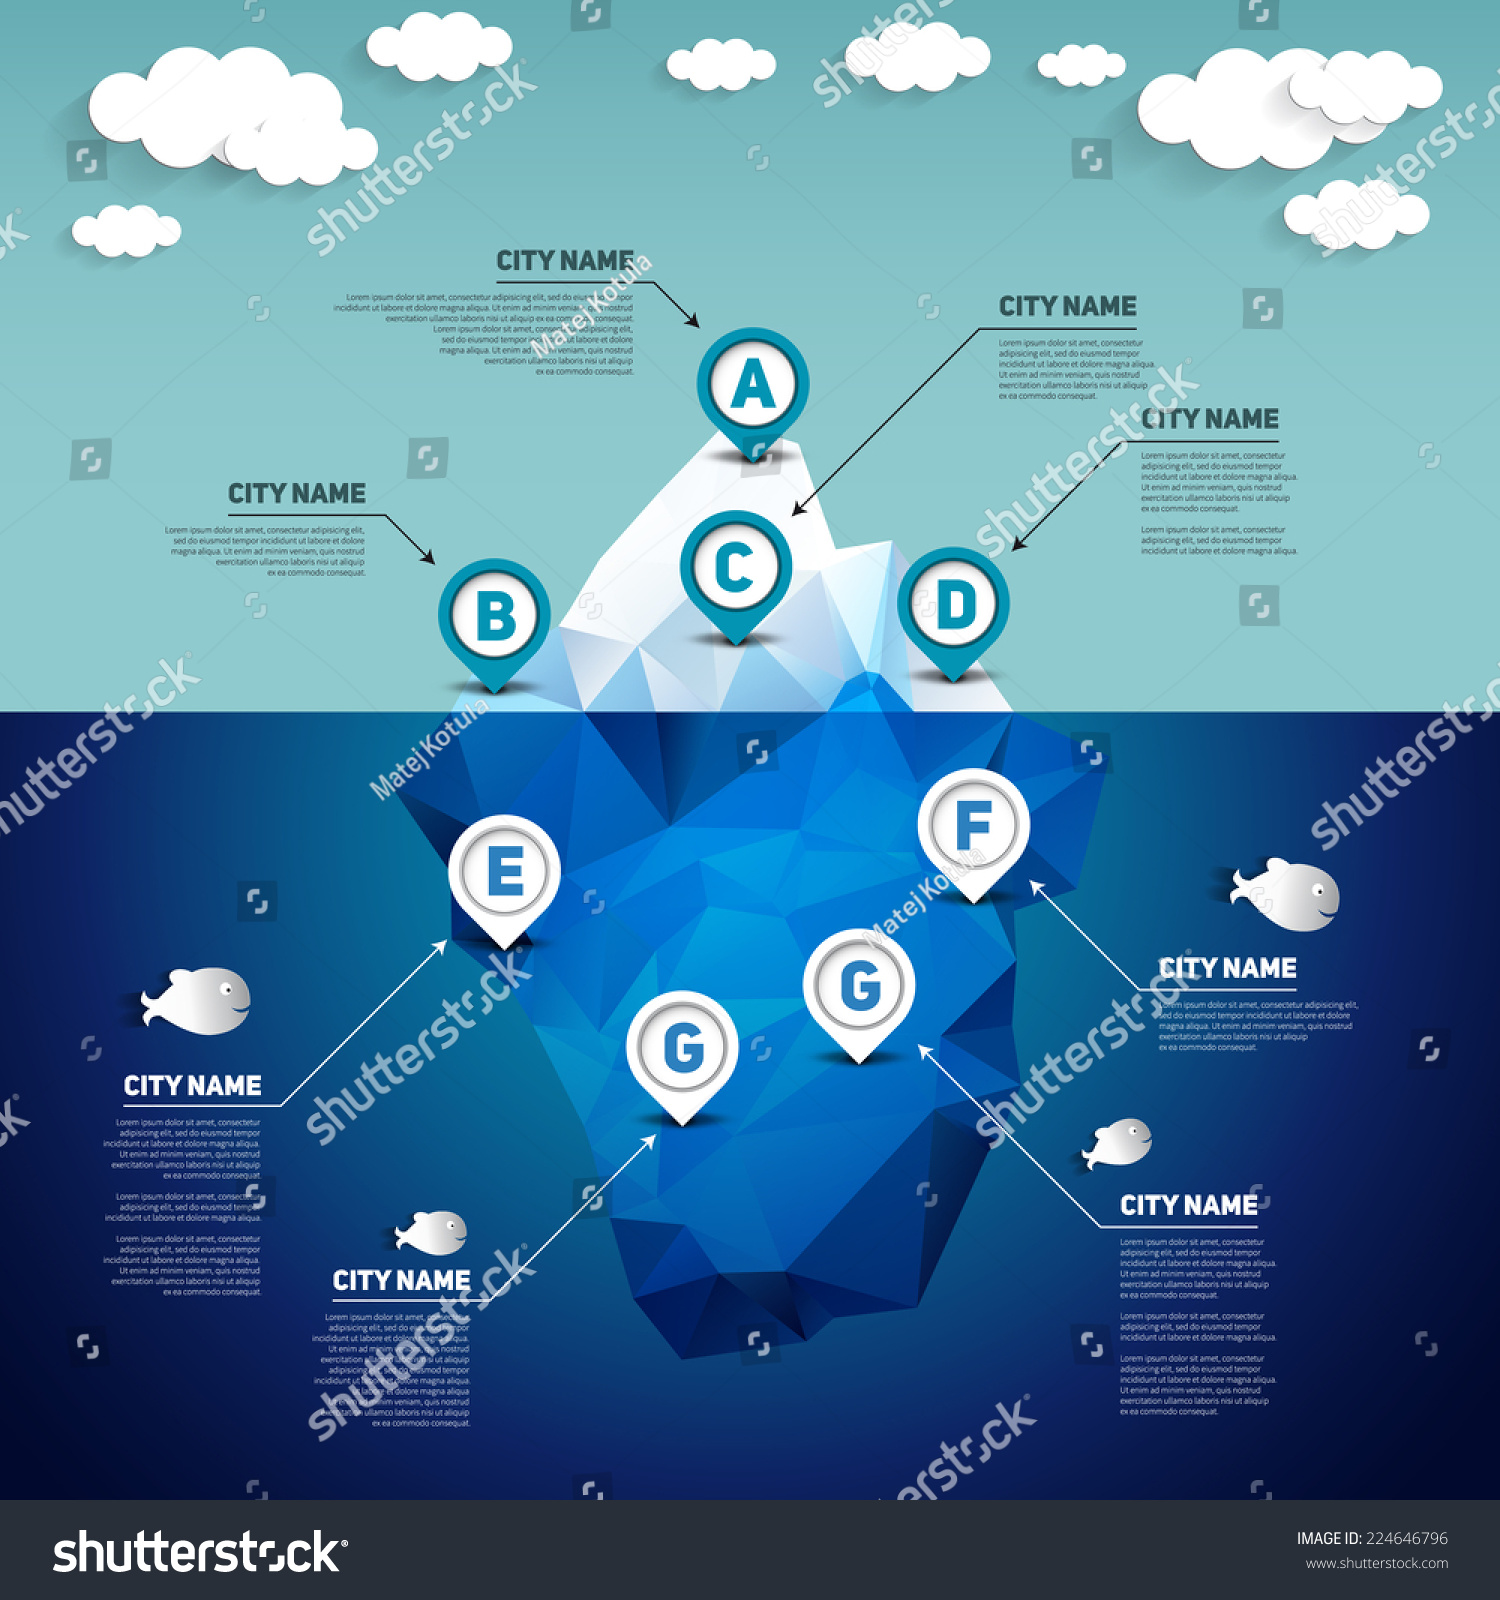 Iceberg Infographic Vector Illustration Stock Vector (Royalty Free ...